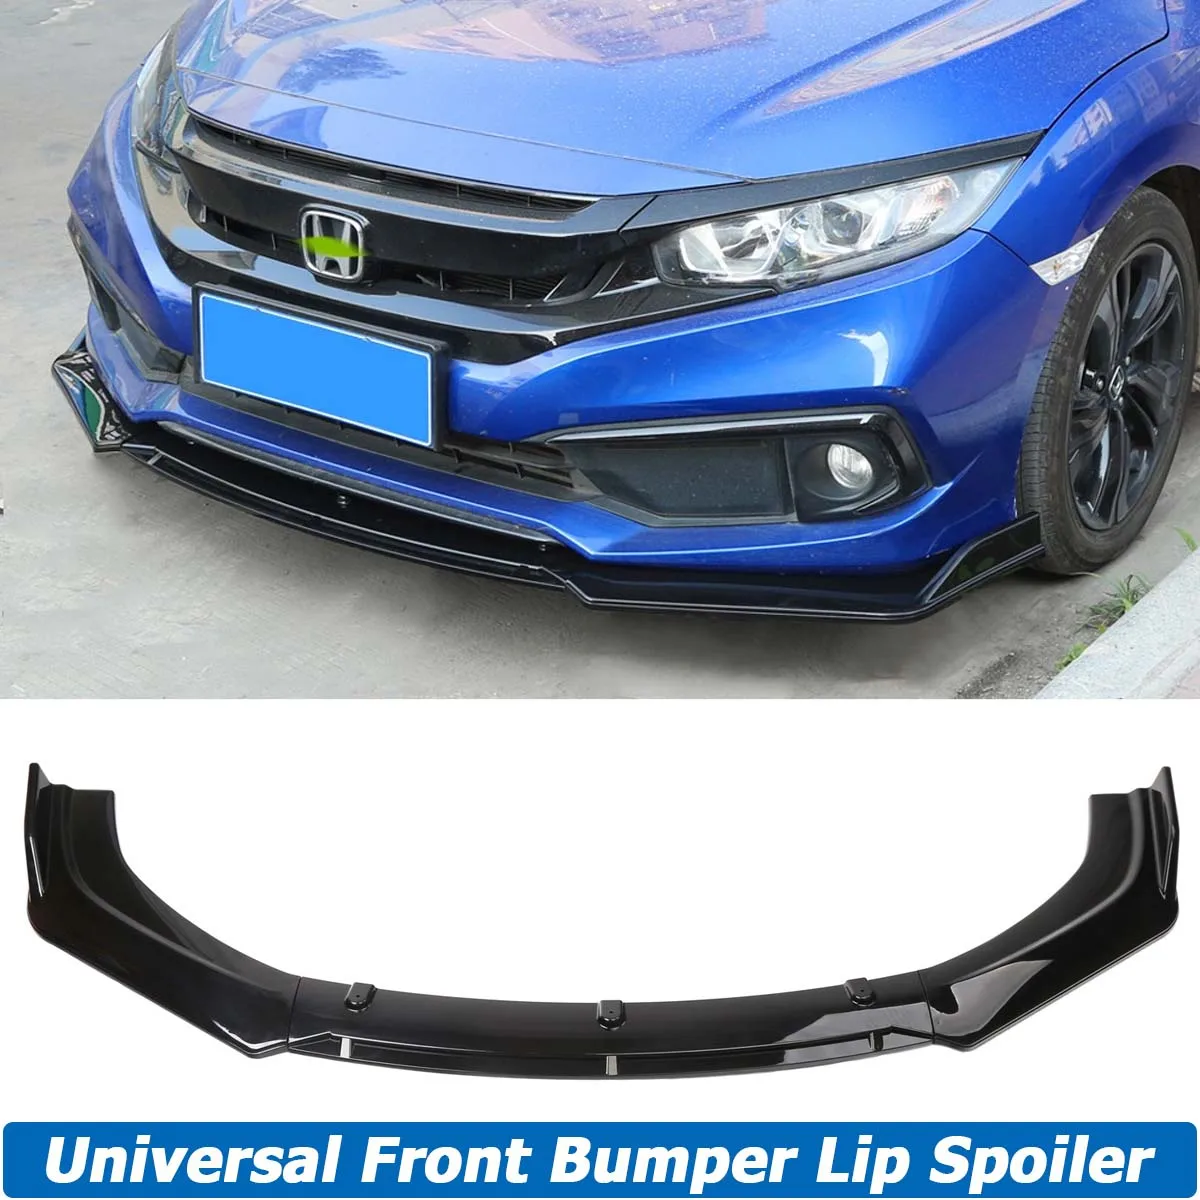 Front Bumper Lip Spoiler Side Splitter Deflector Body Kit Guards For Honda Civic Sedan 2016 2017 2018 2019 2020 Car Accessories